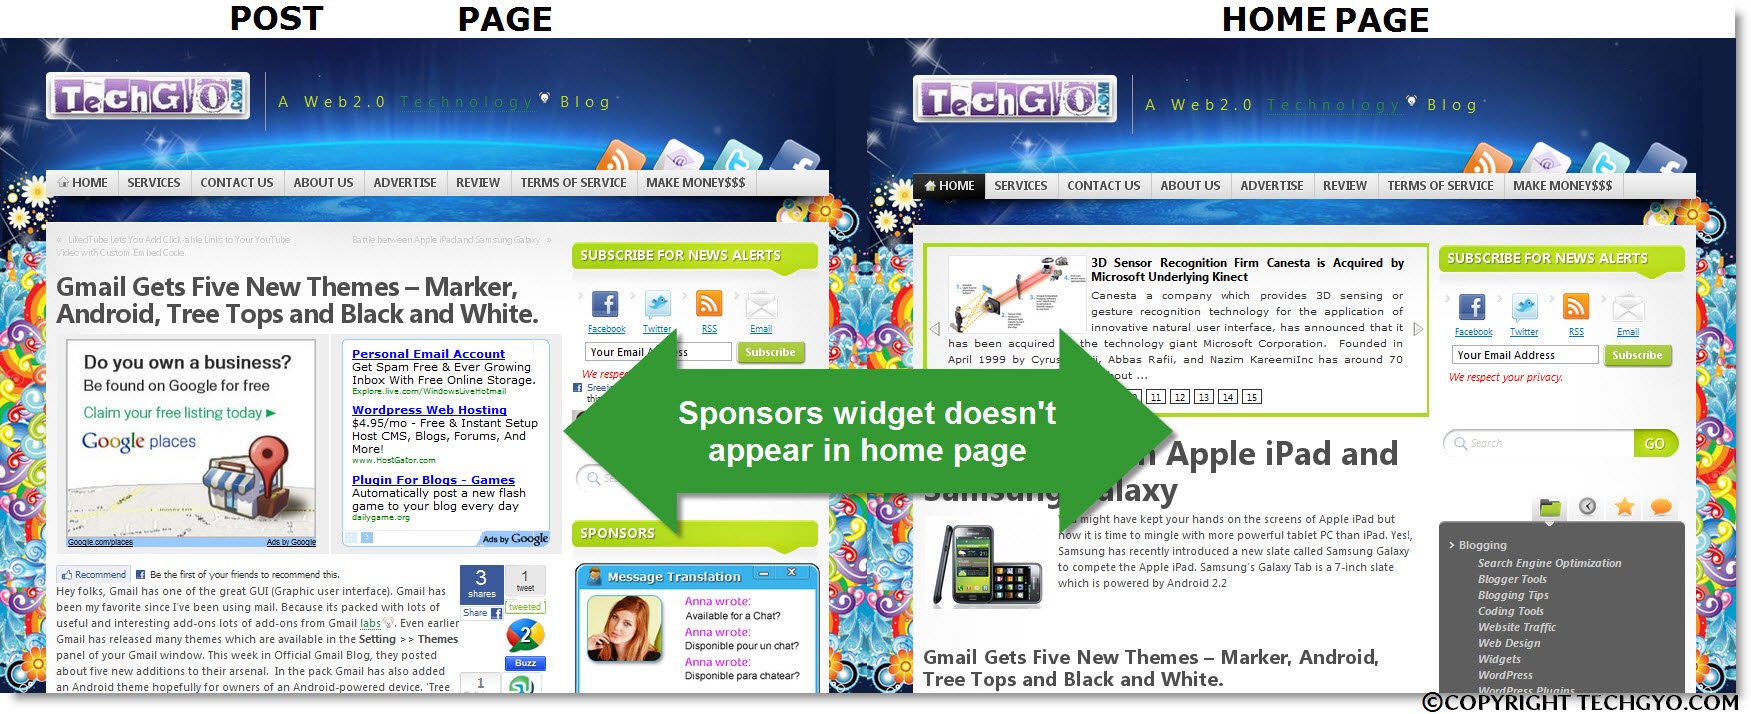 HOME PAGE widget & POST PAGE widget OMARISON